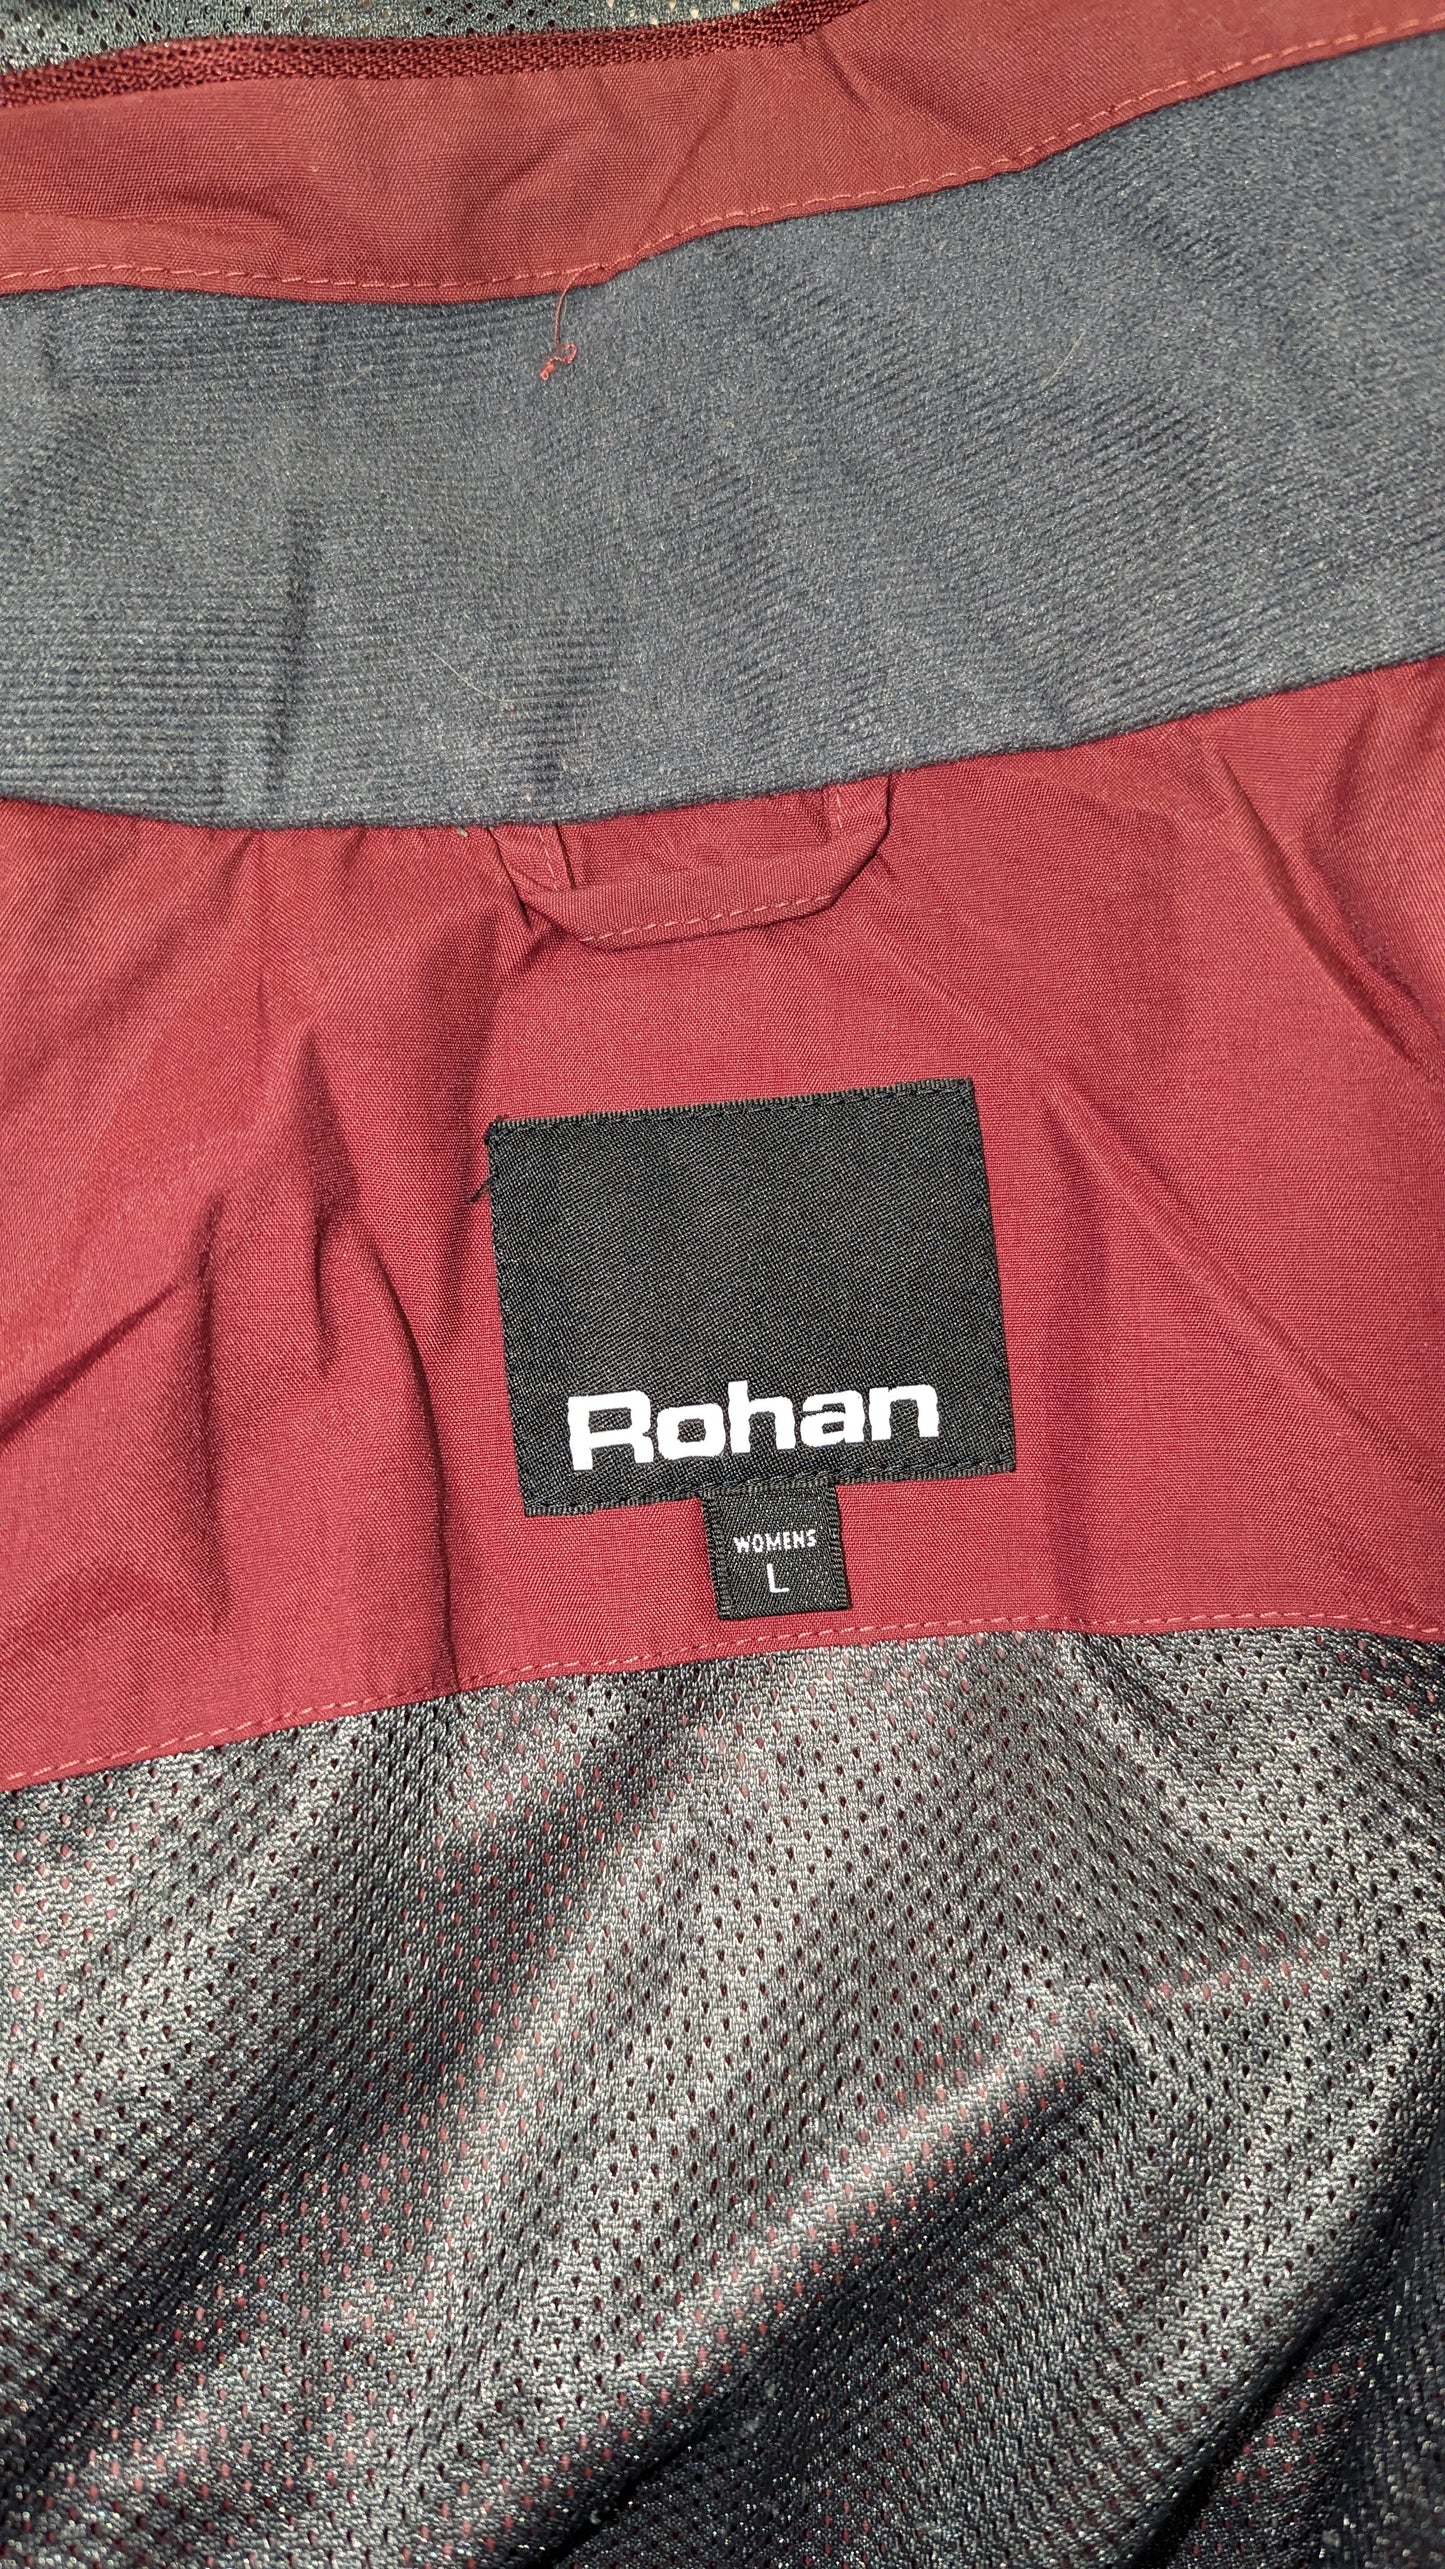 Ladies Rohan Waterproof Coat - Size L